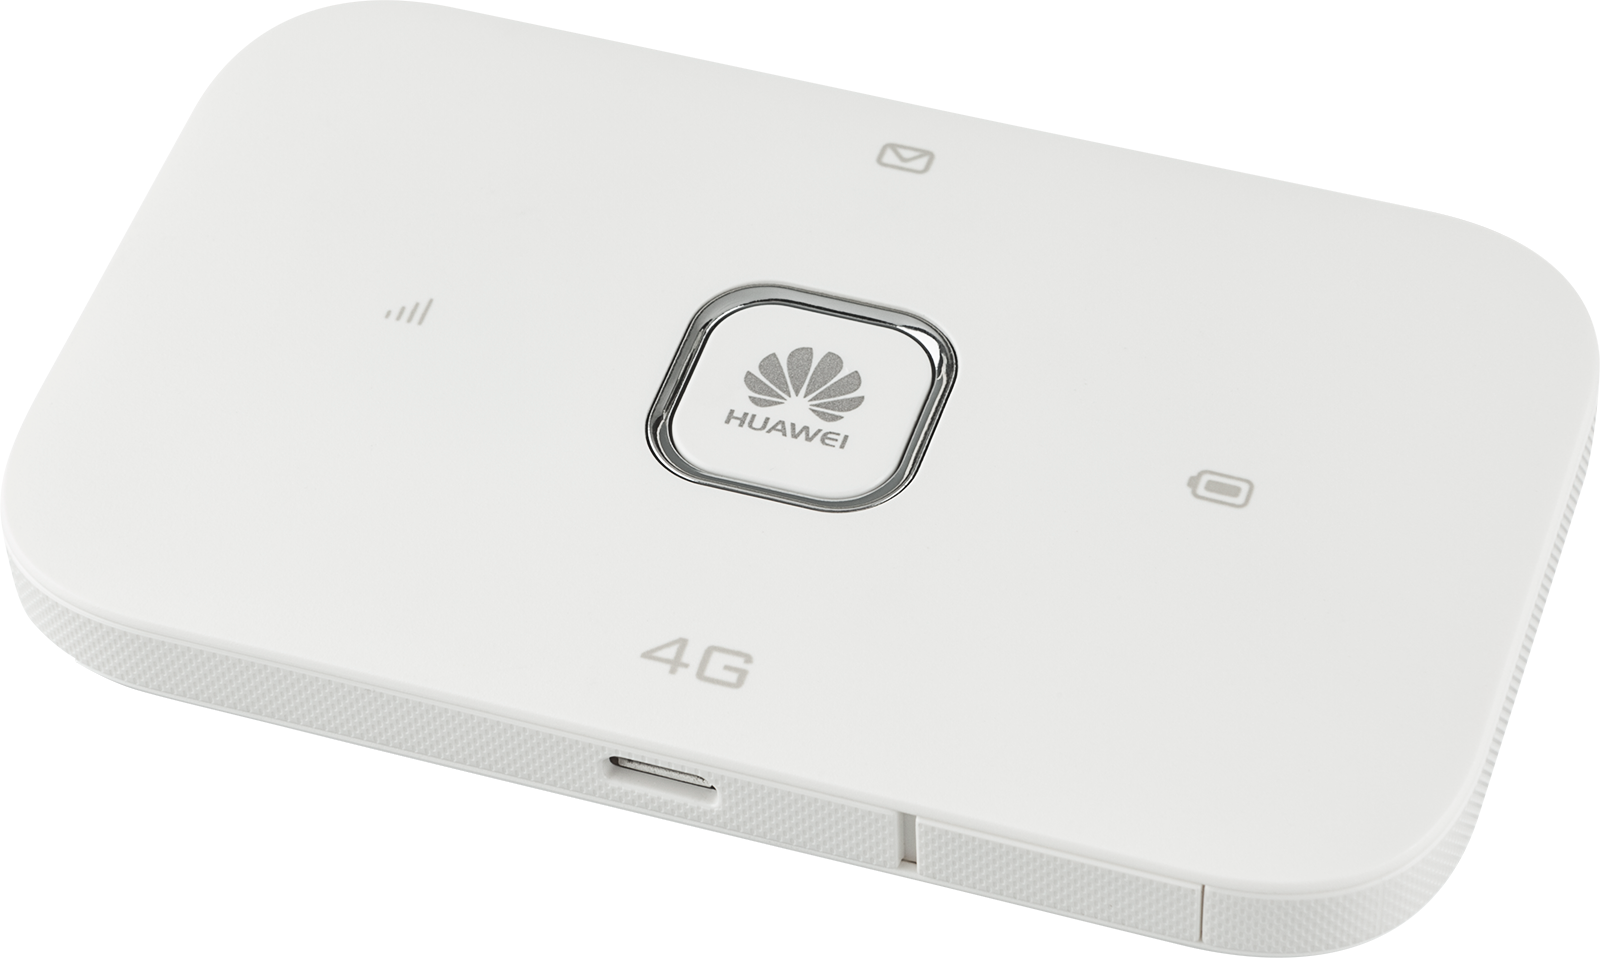 Huawei E5573 Vs E5330